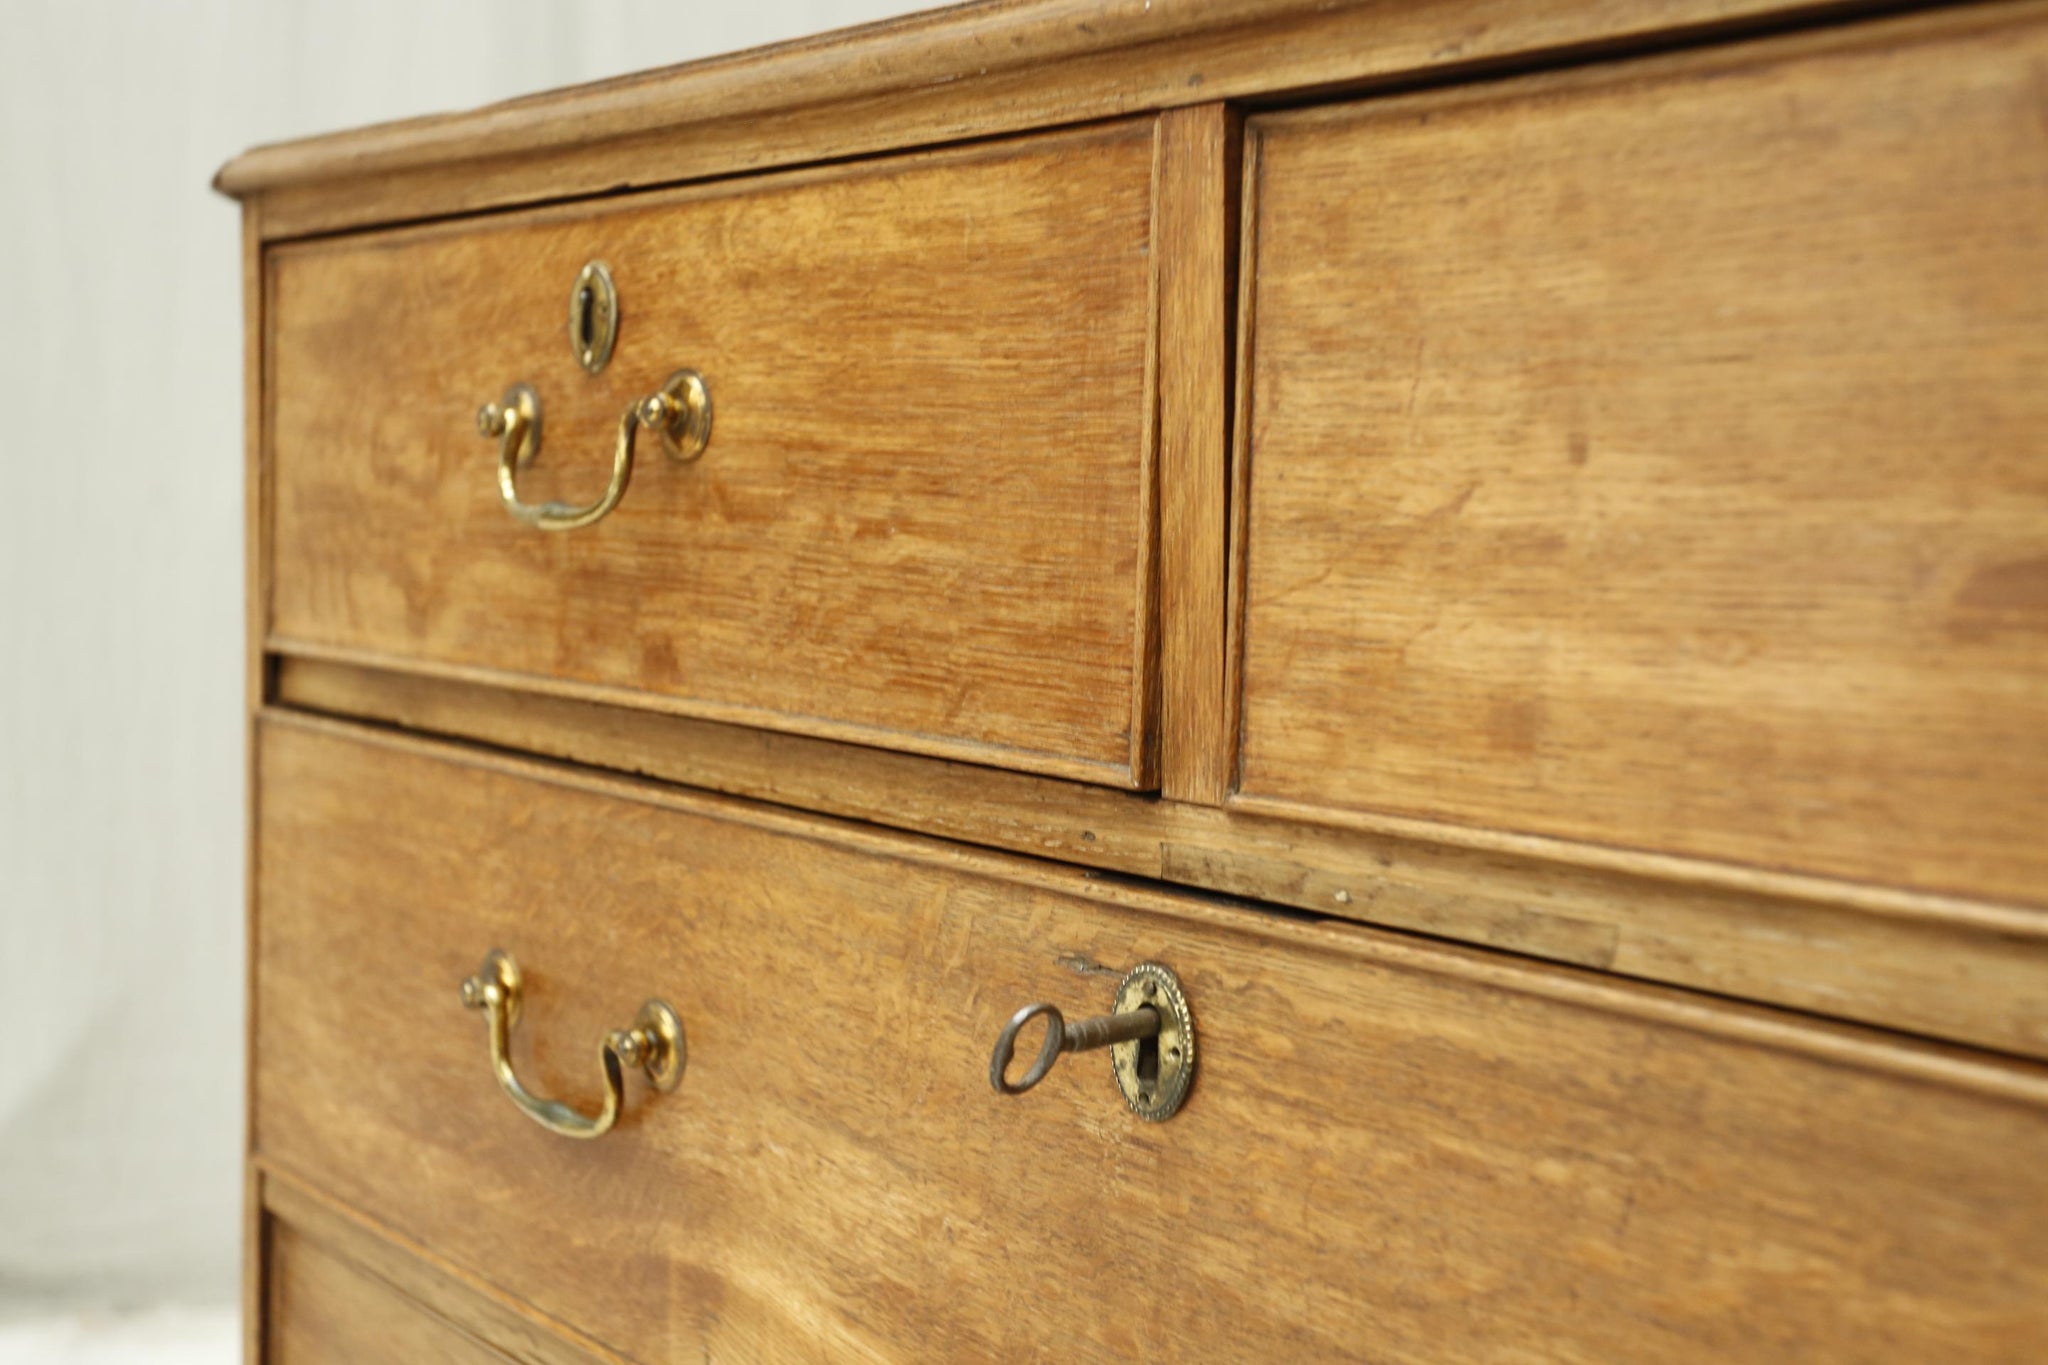 Tall Georgian oak chest of drawers